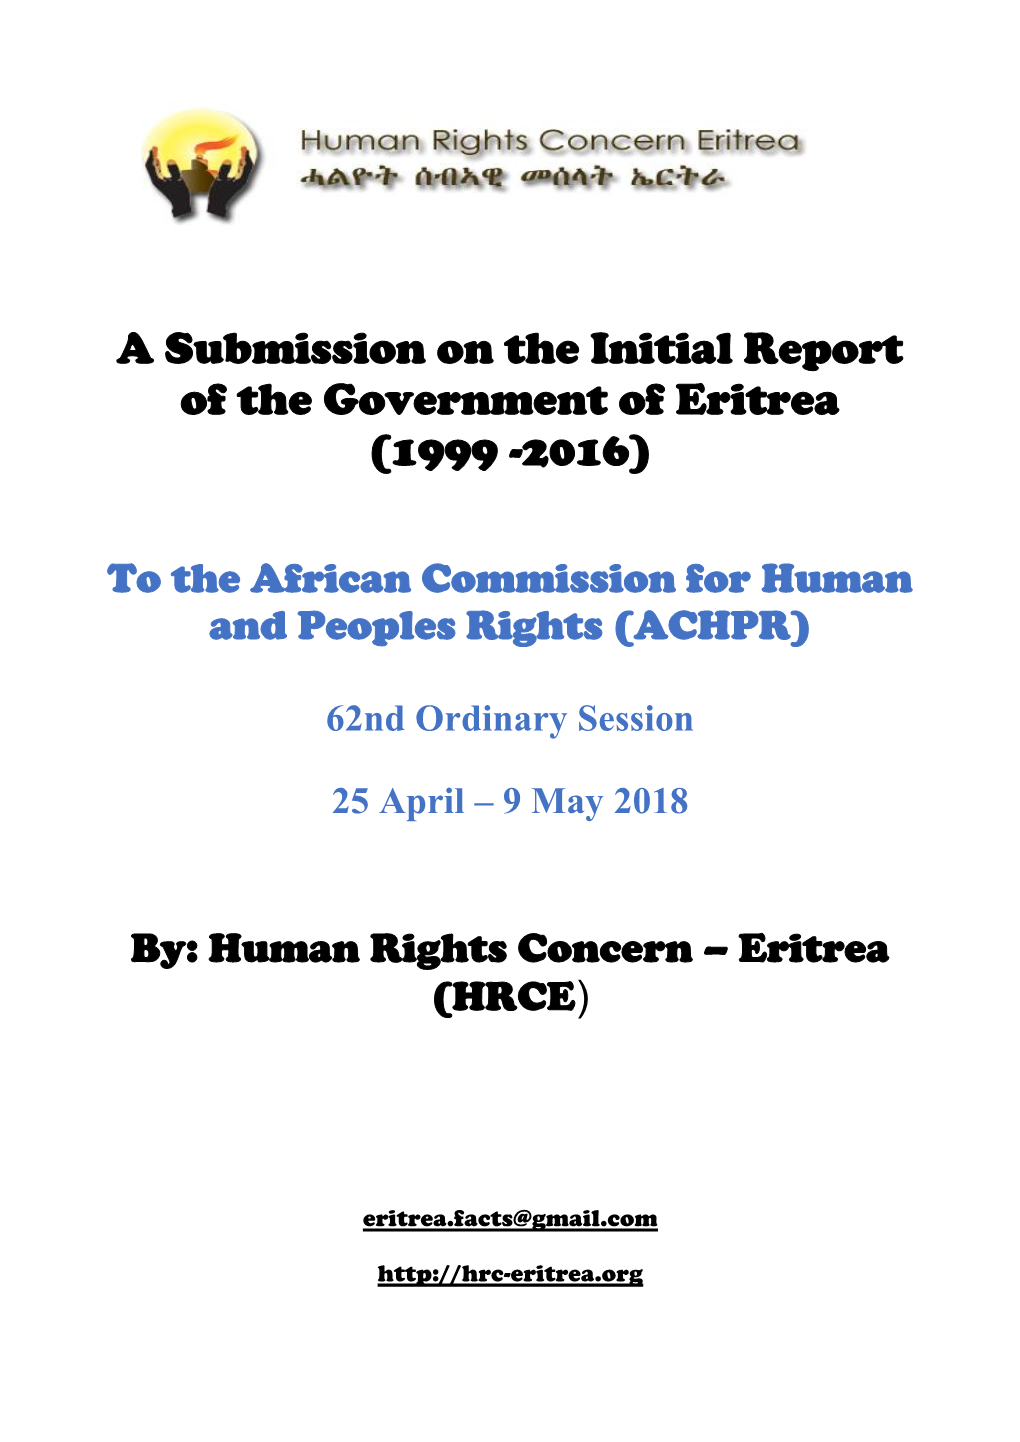 Response to Eritrea: Initial REPORT